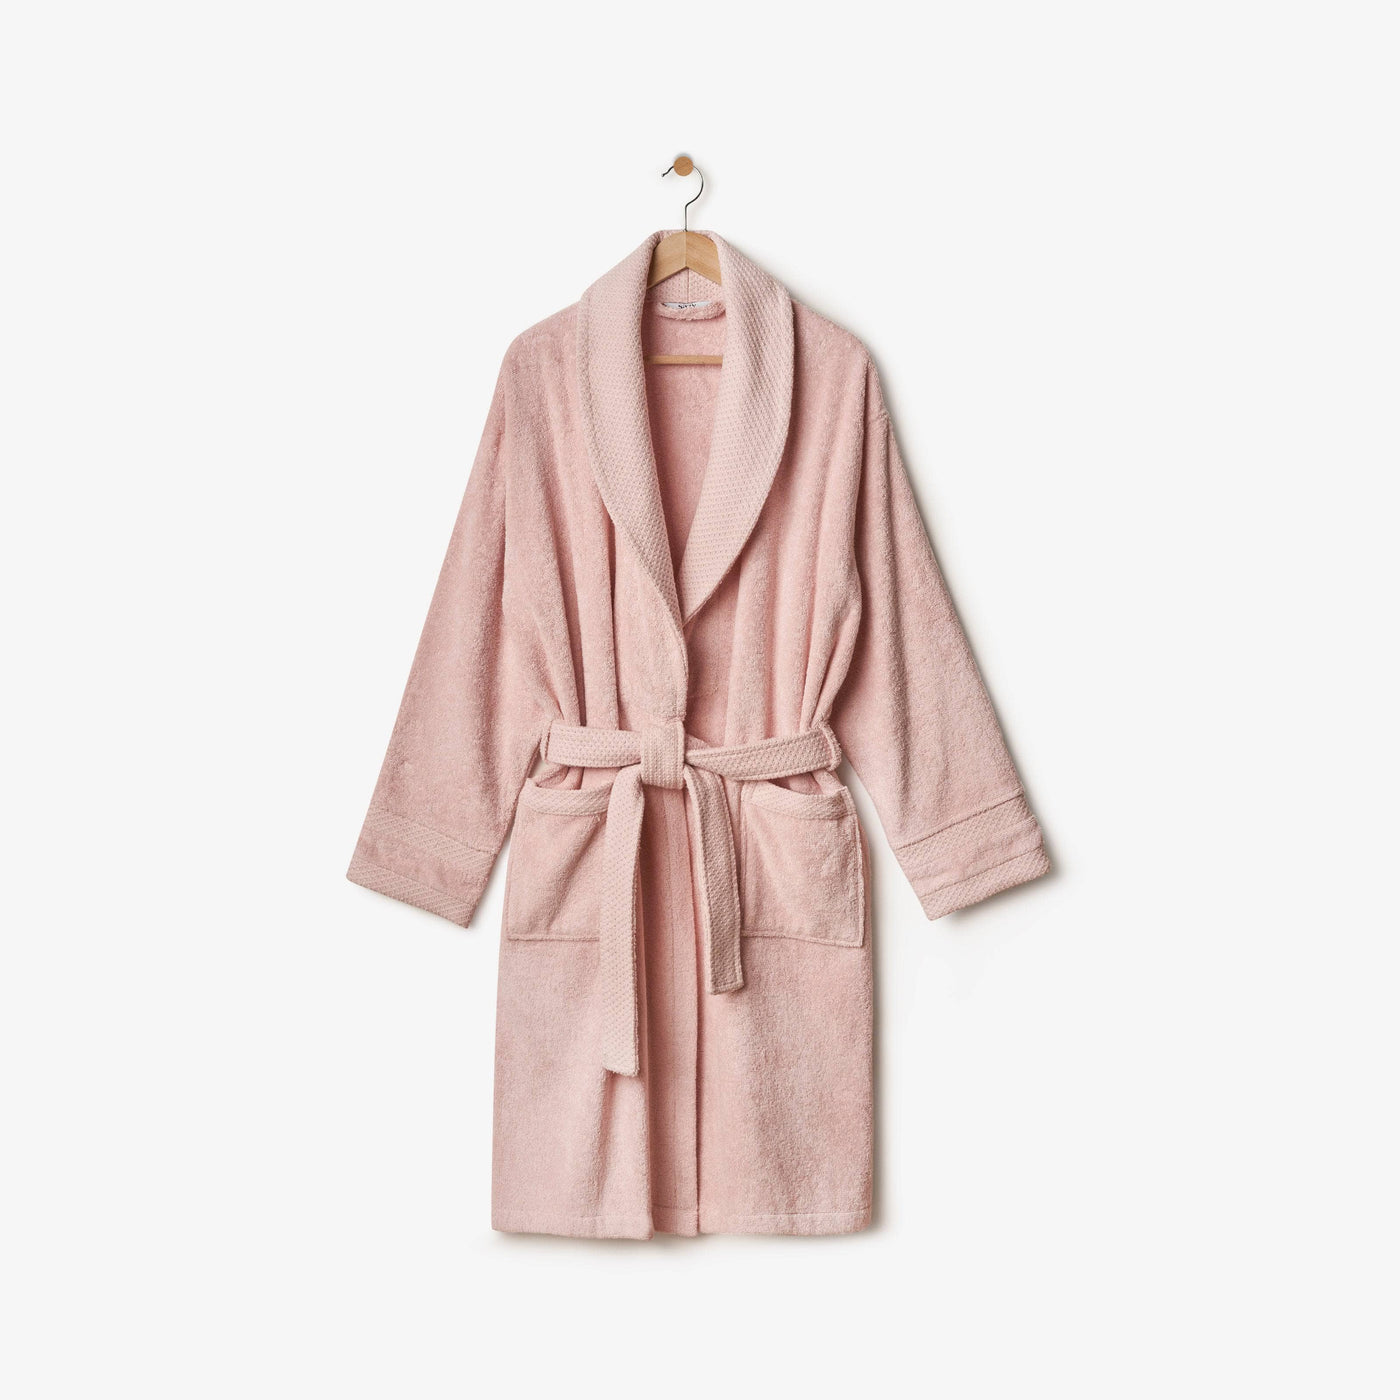 Rosalie Aqua Fibro Extra Soft 100% Turkish Cotton Women's Dressing Gown, Pink, L Dressing Gowns sazy.com